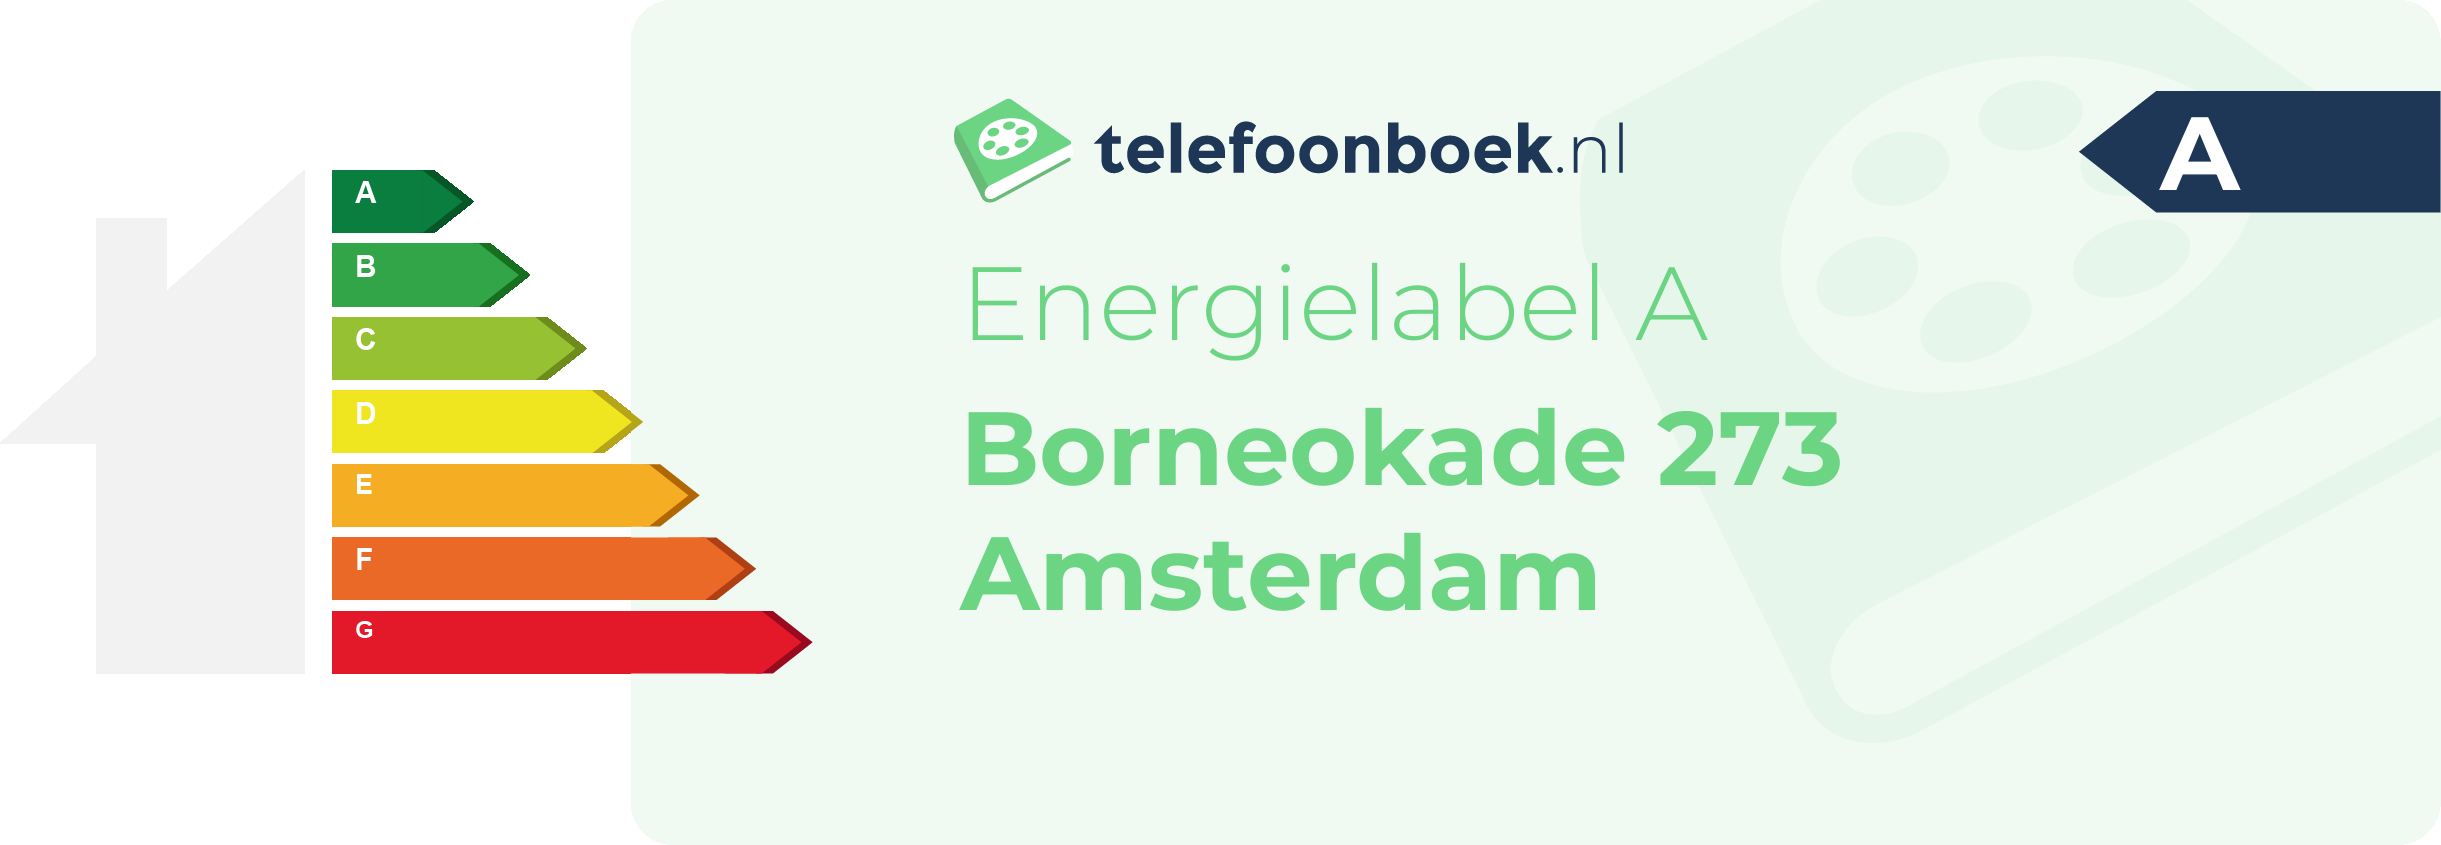 Energielabel Borneokade 273 Amsterdam